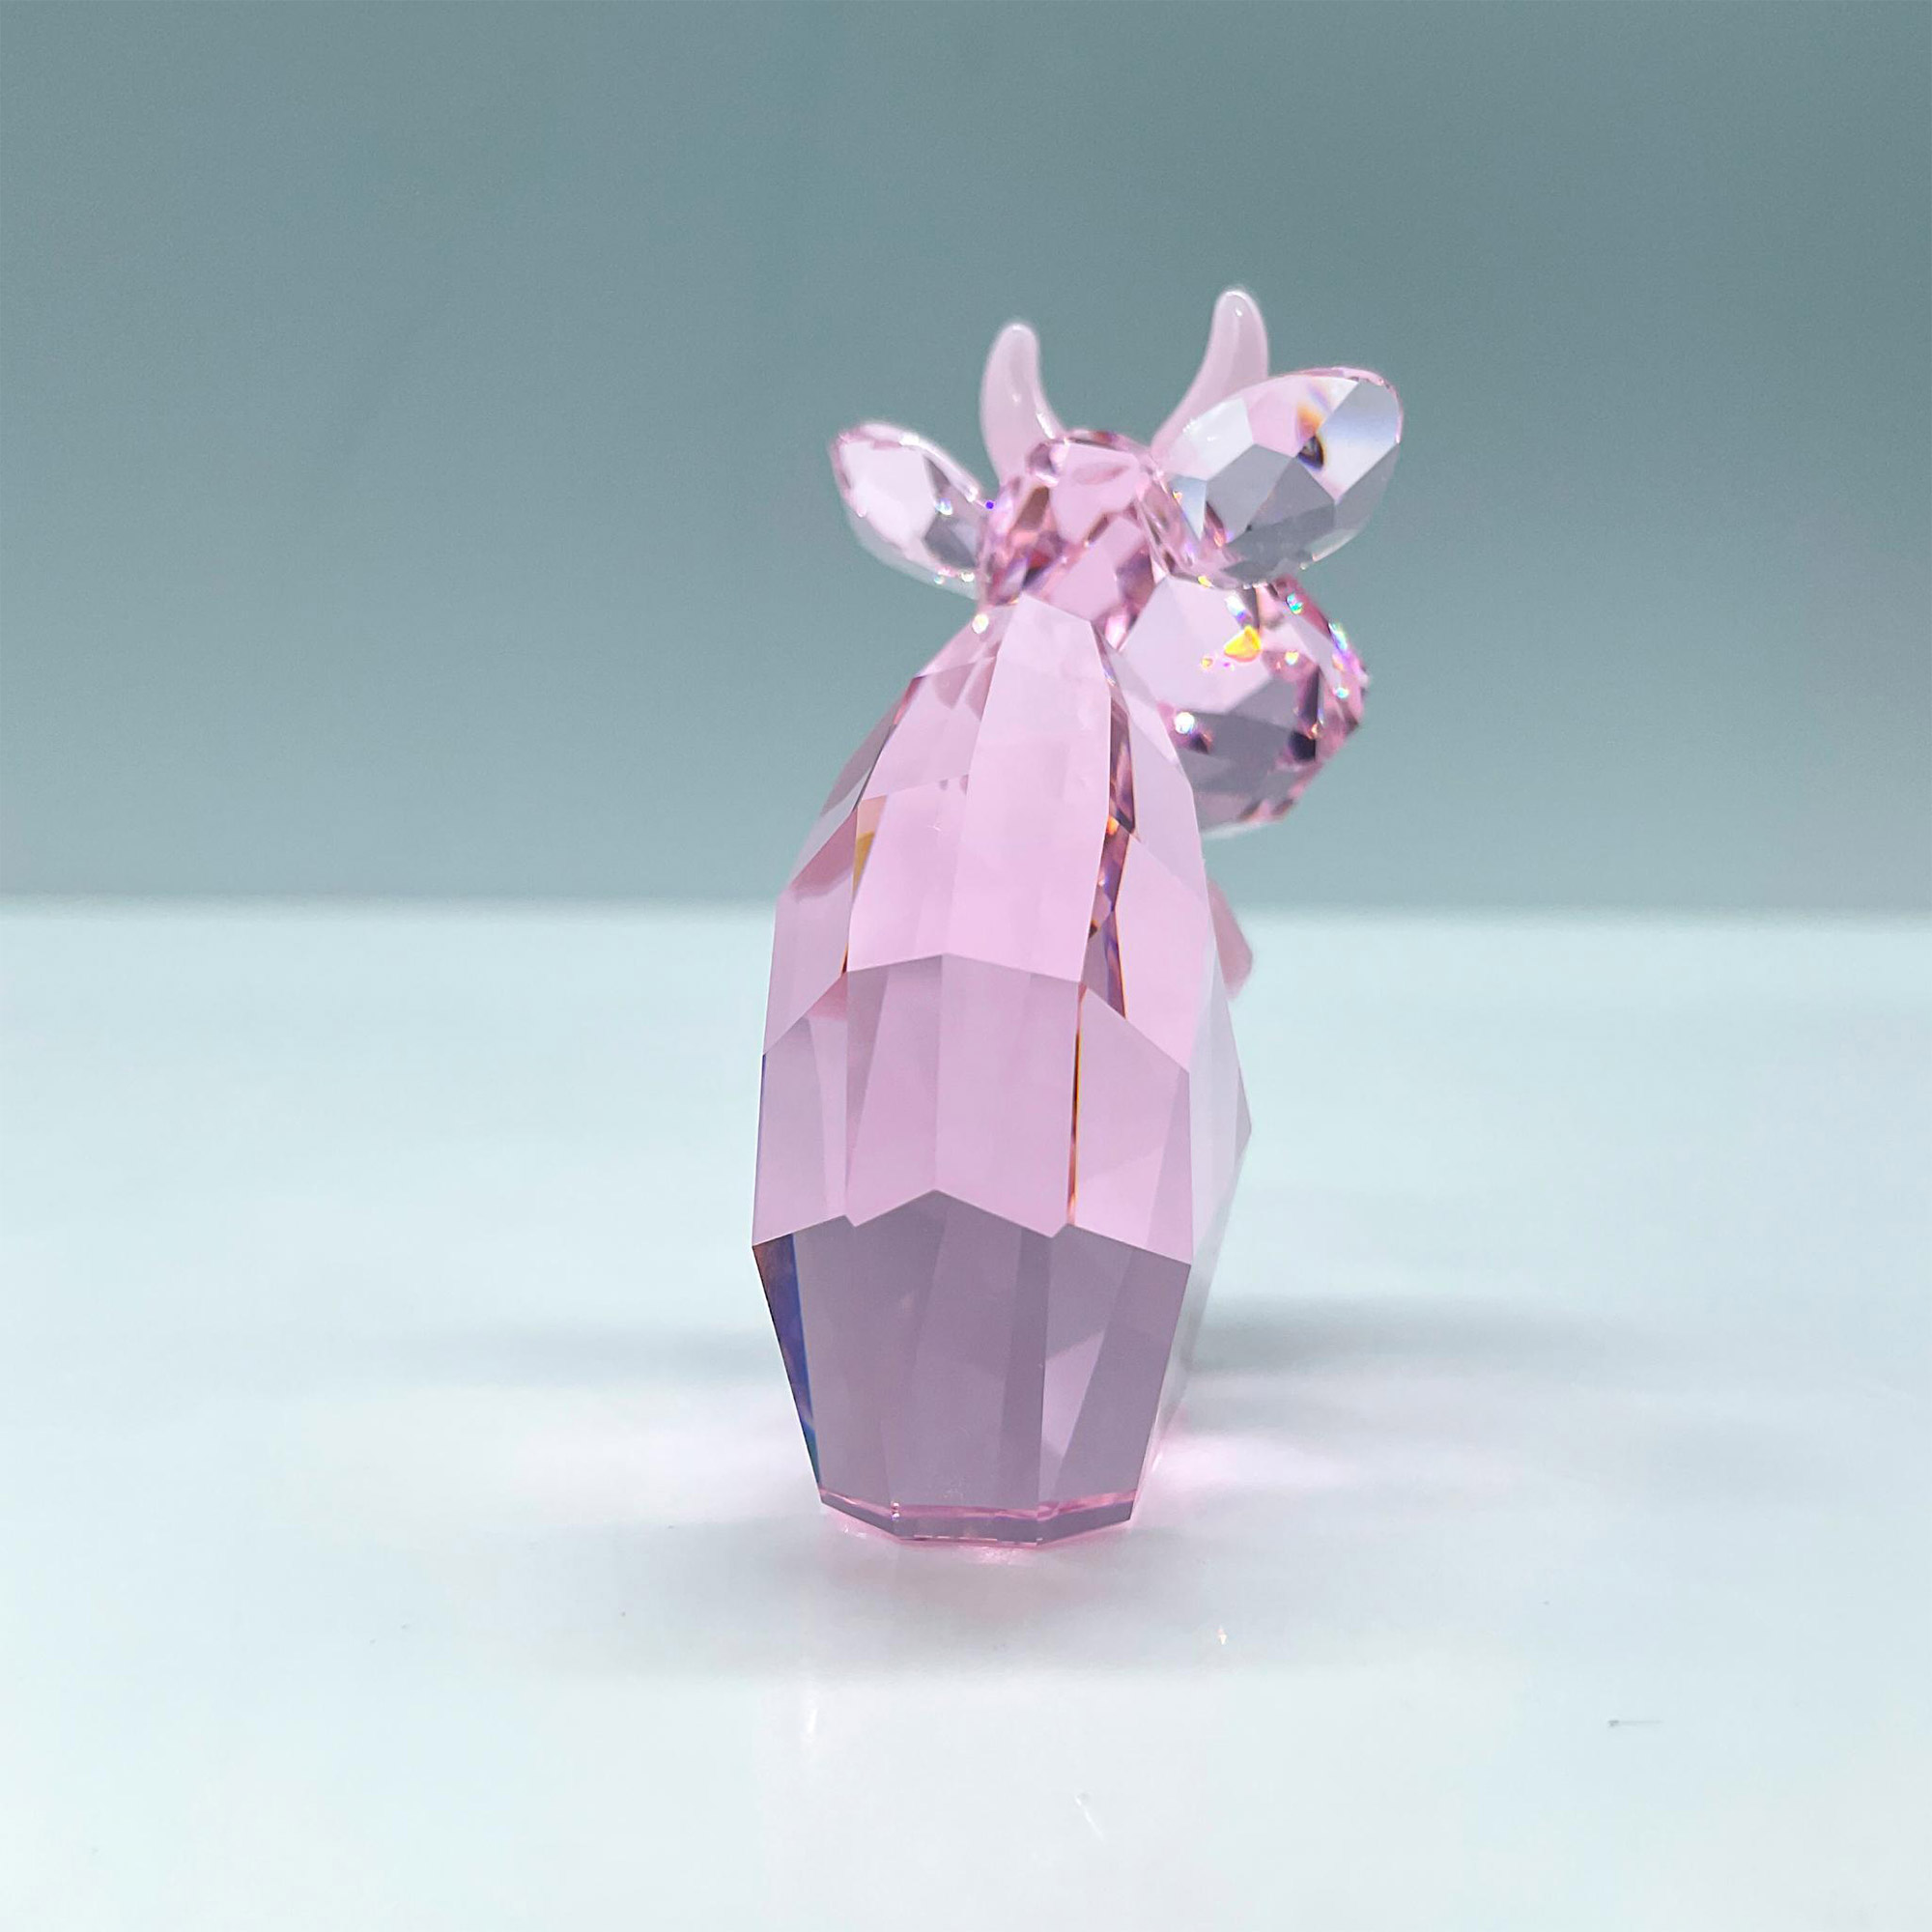 Swarovski Crystal Figurine, Pinky Mo - Image 2 of 4